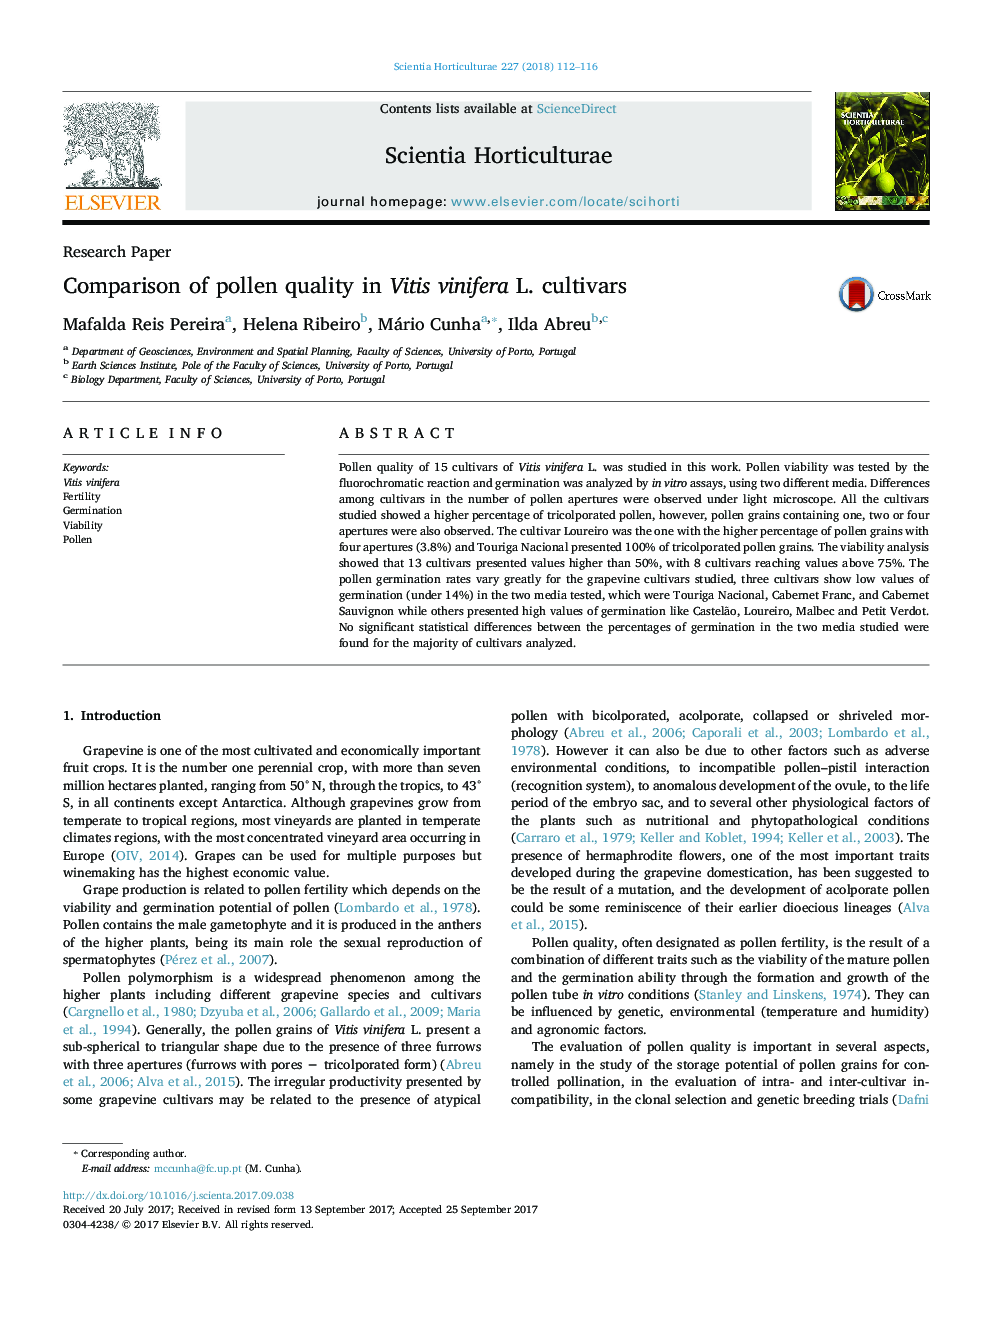 Research PaperComparison of pollen quality in Vitis vinifera L. cultivars